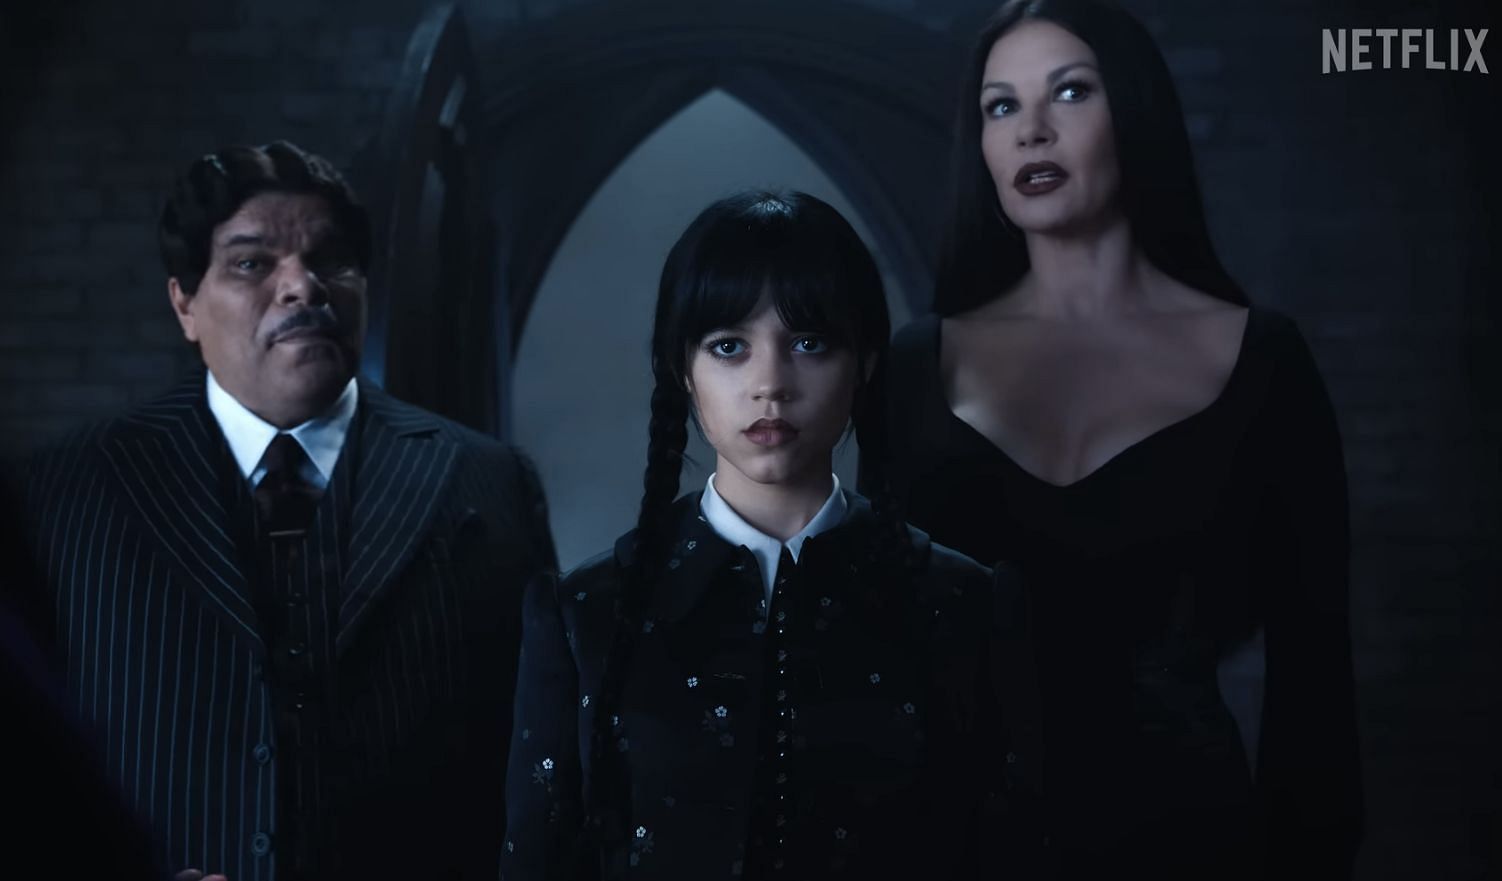 Catherine Zeta-Jones Was Born to Play Morticia Addams